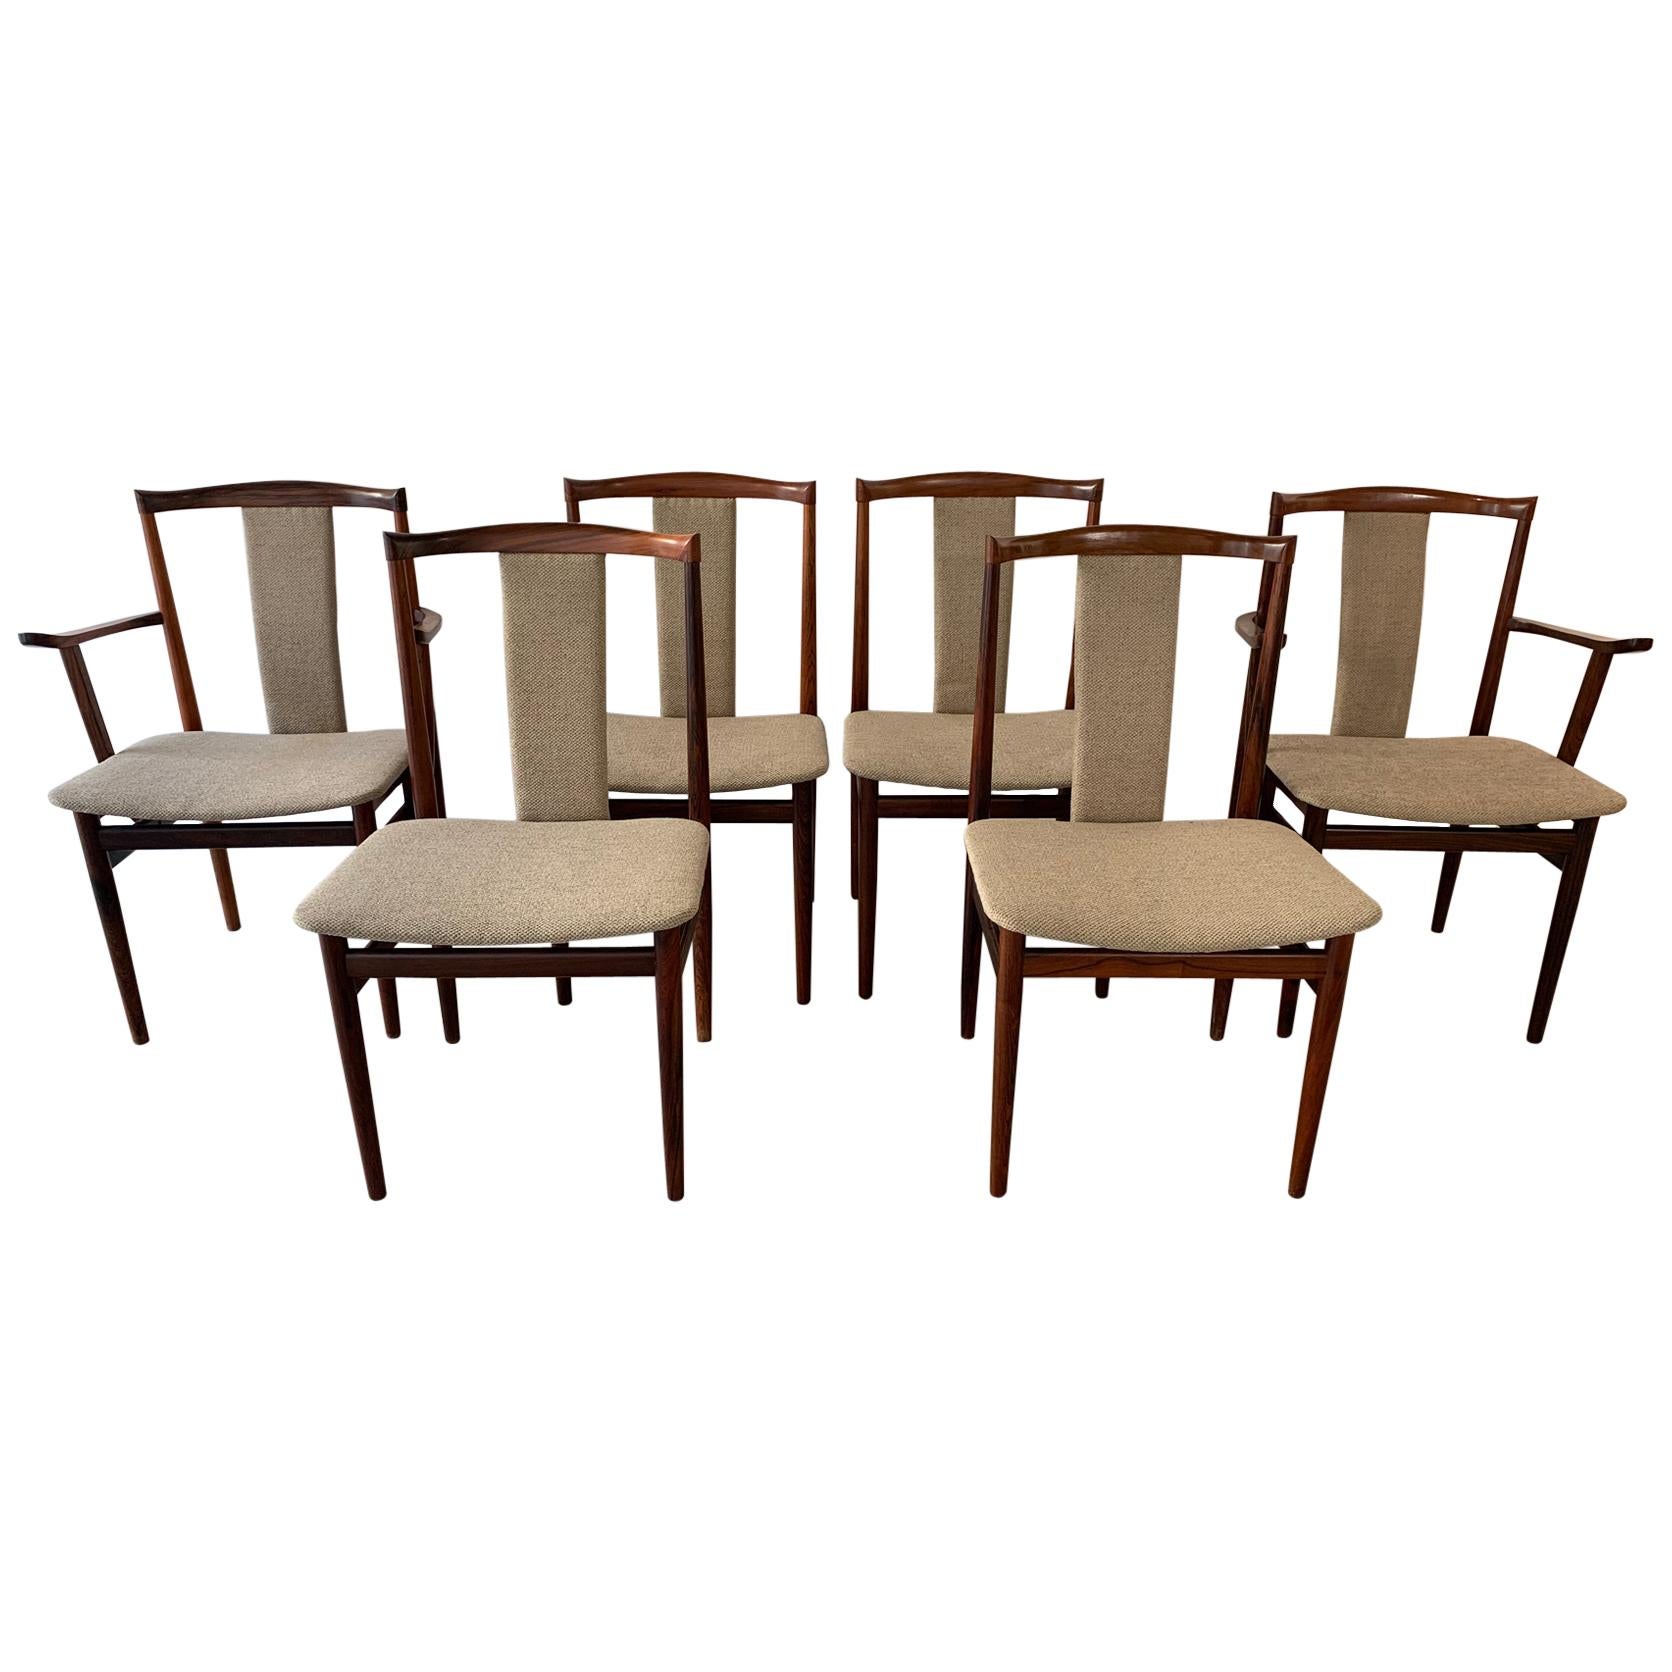 1960s Set of 6 Midcentury Rosewood Henning Sorensen Dining Chairs for Dan-Ex